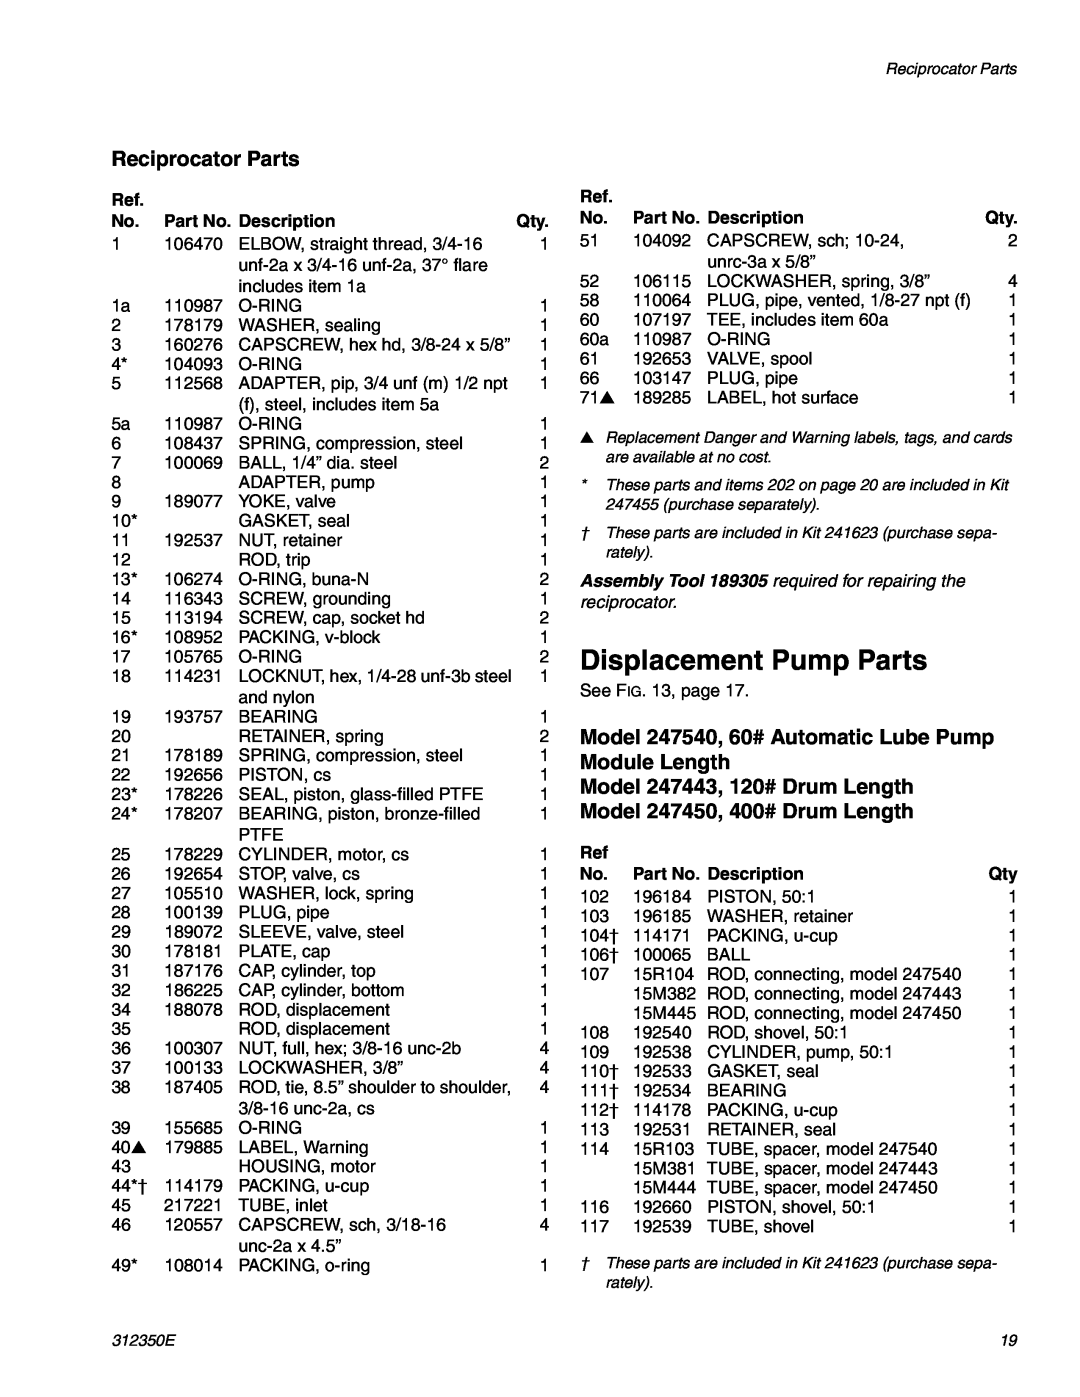 Hitachi 312350E Displacement Pump Parts, Reciprocator Parts, Model 247540, 60# Automatic Lube Pump Module Length 